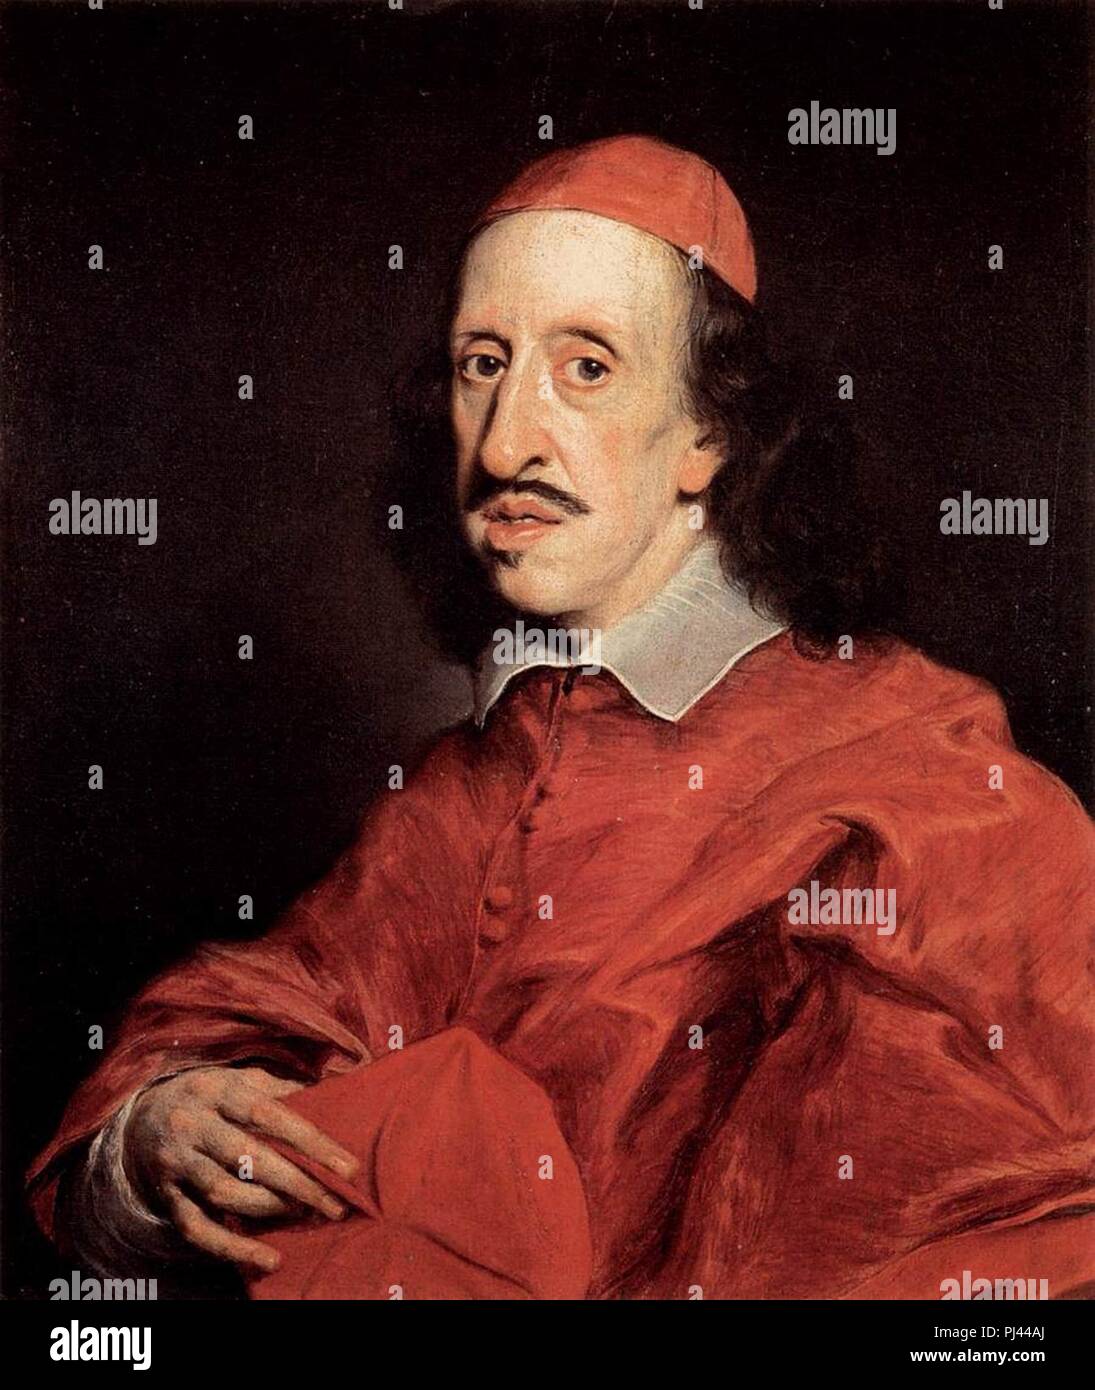 Baciccio - Il cardinale Leopoldo de' Medici - Foto Stock